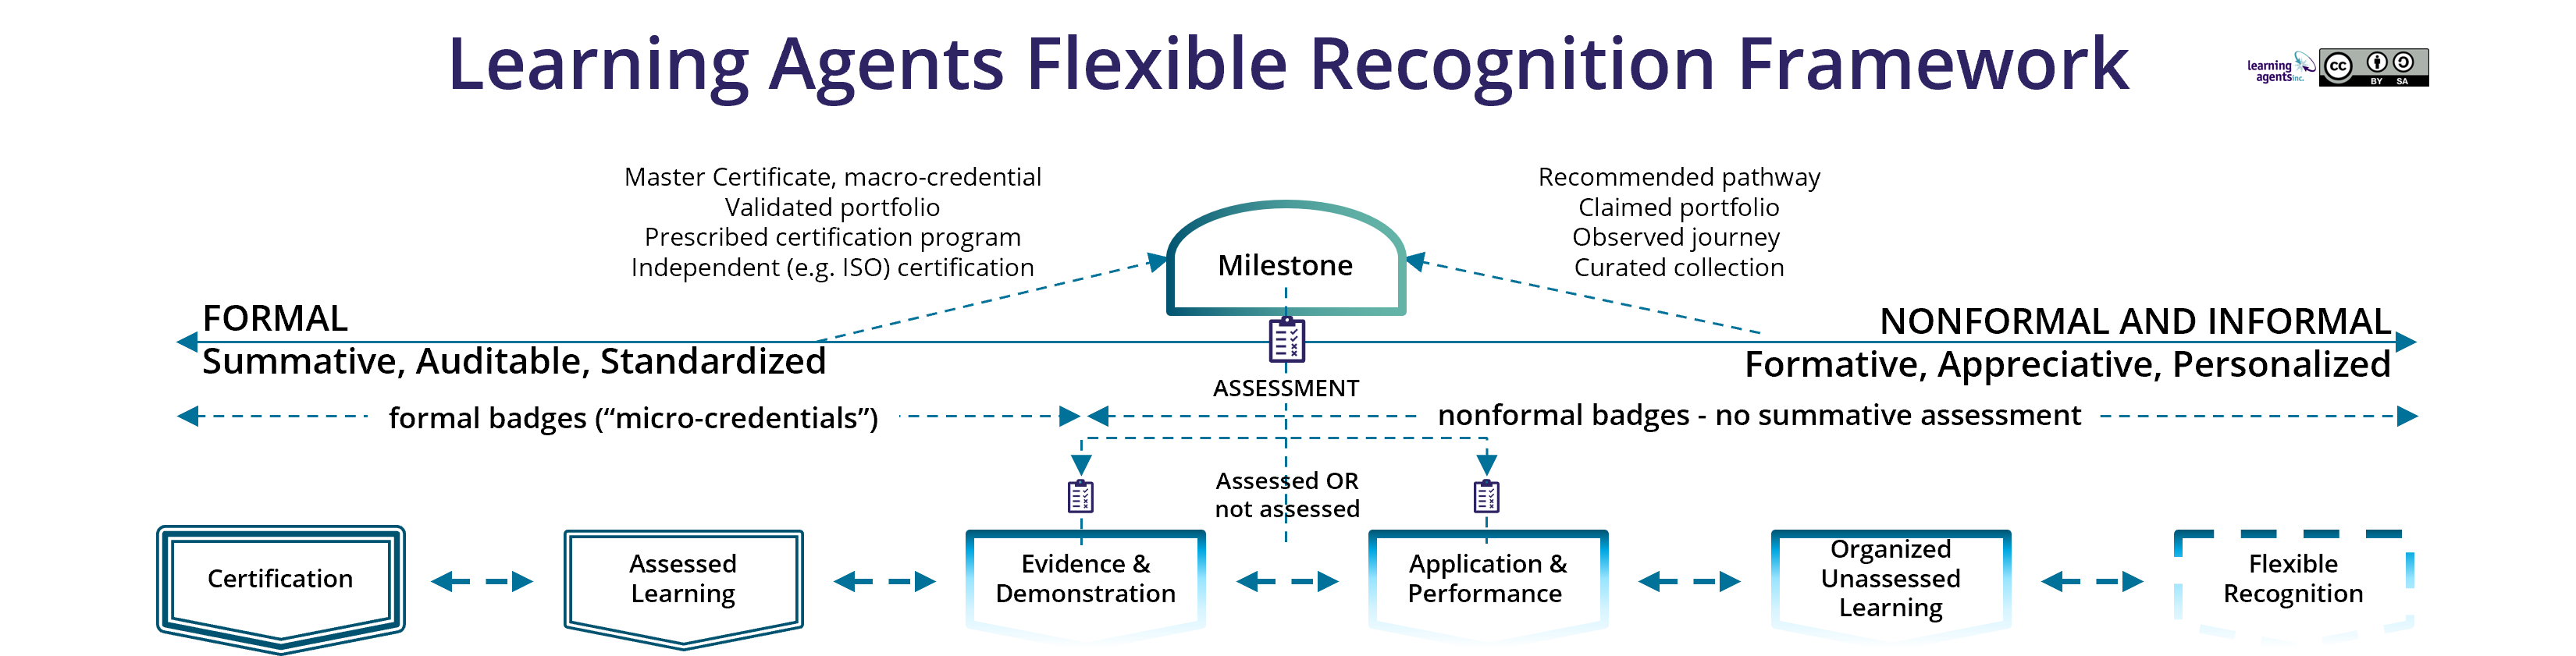 Learning Agents Flexible Recognition Framework